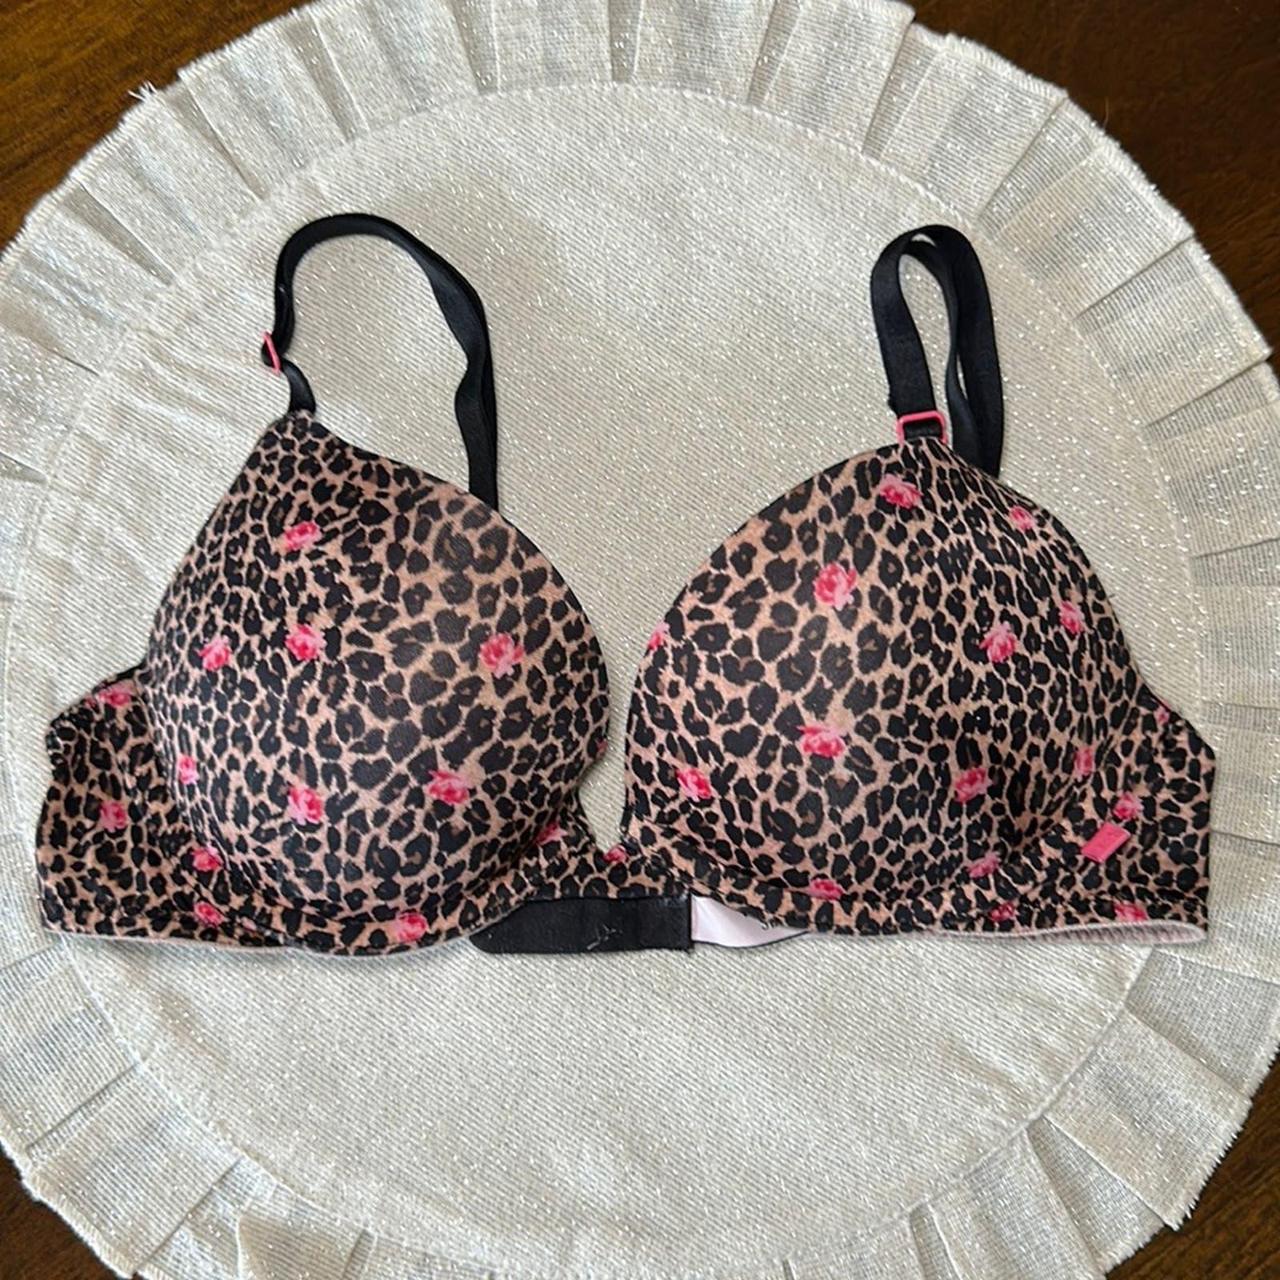 32B Victoria's Secret push-up bra in perfect - Depop